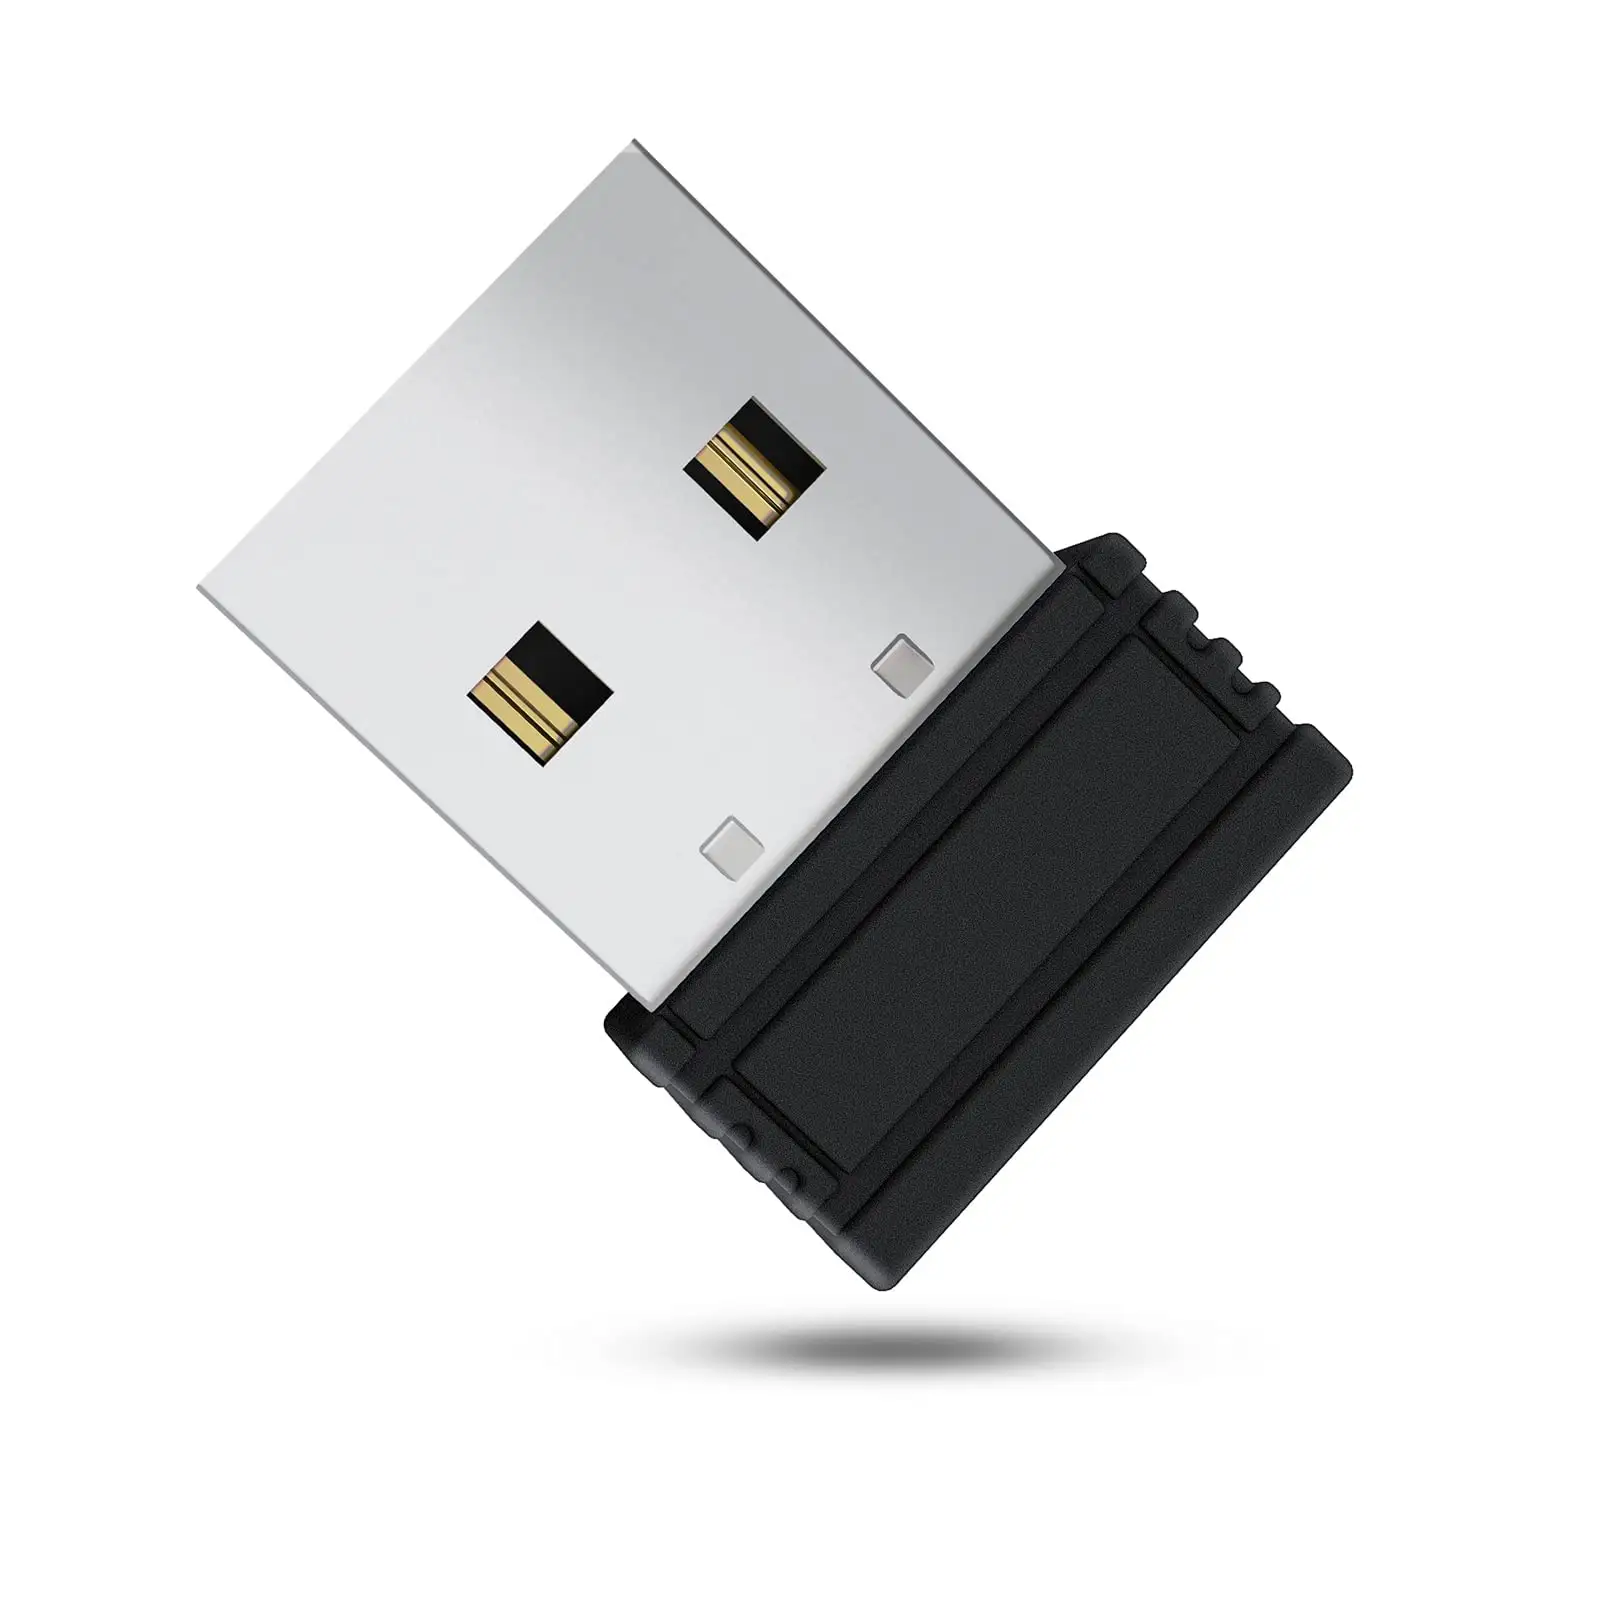 Muti-system compatibile usa Keep PC Awake Mouse Jiggler porta USB Shaker non rilevabile per Computer portatile